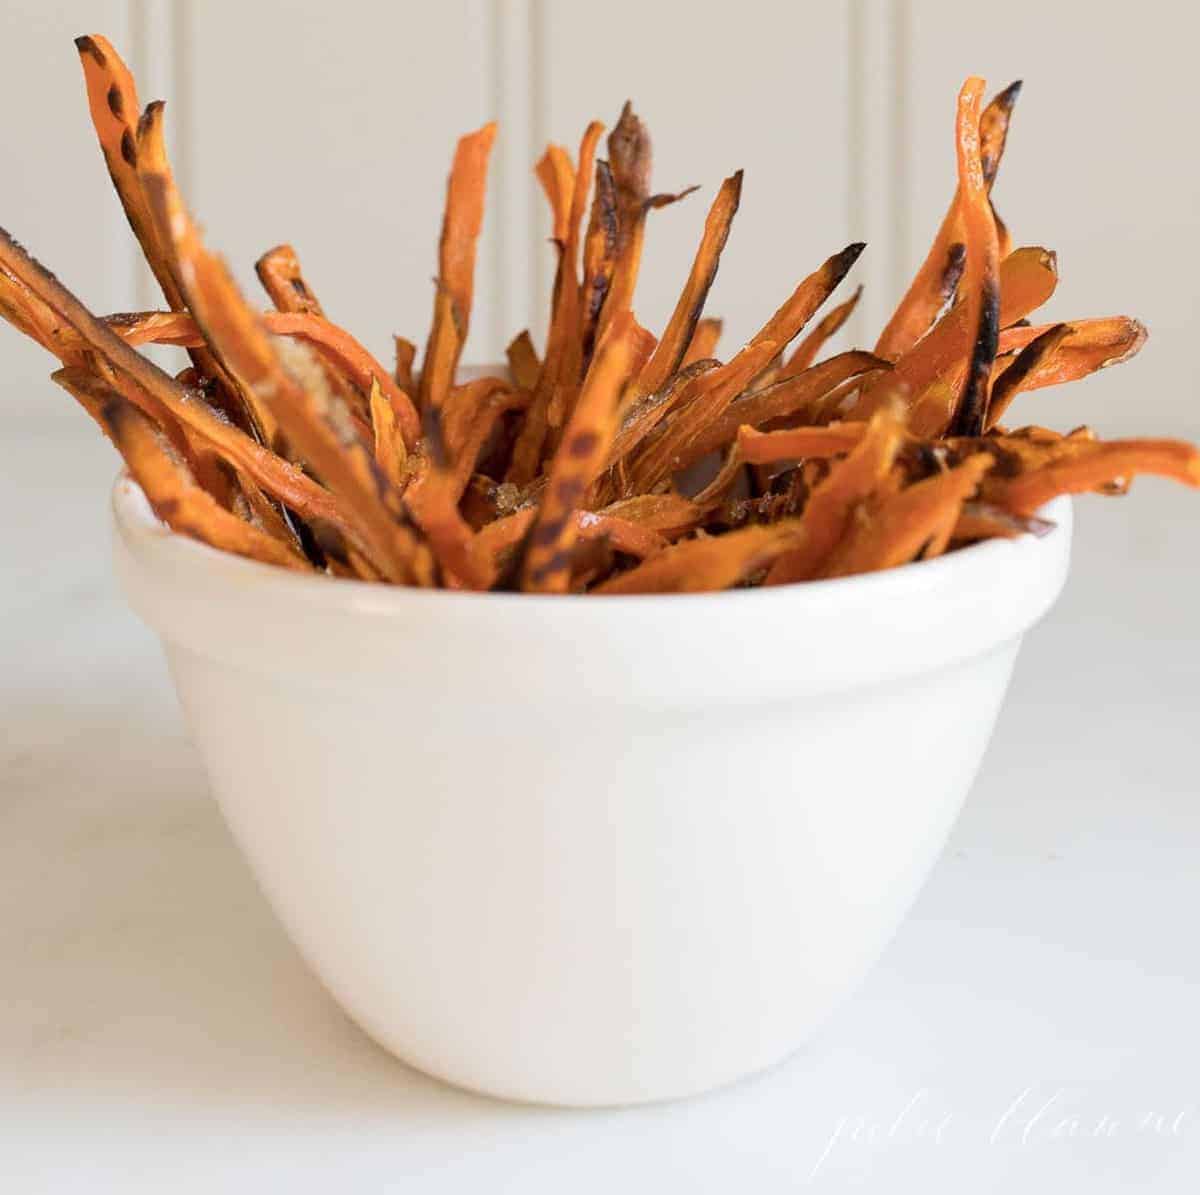 sweet potato fries in cream bowl